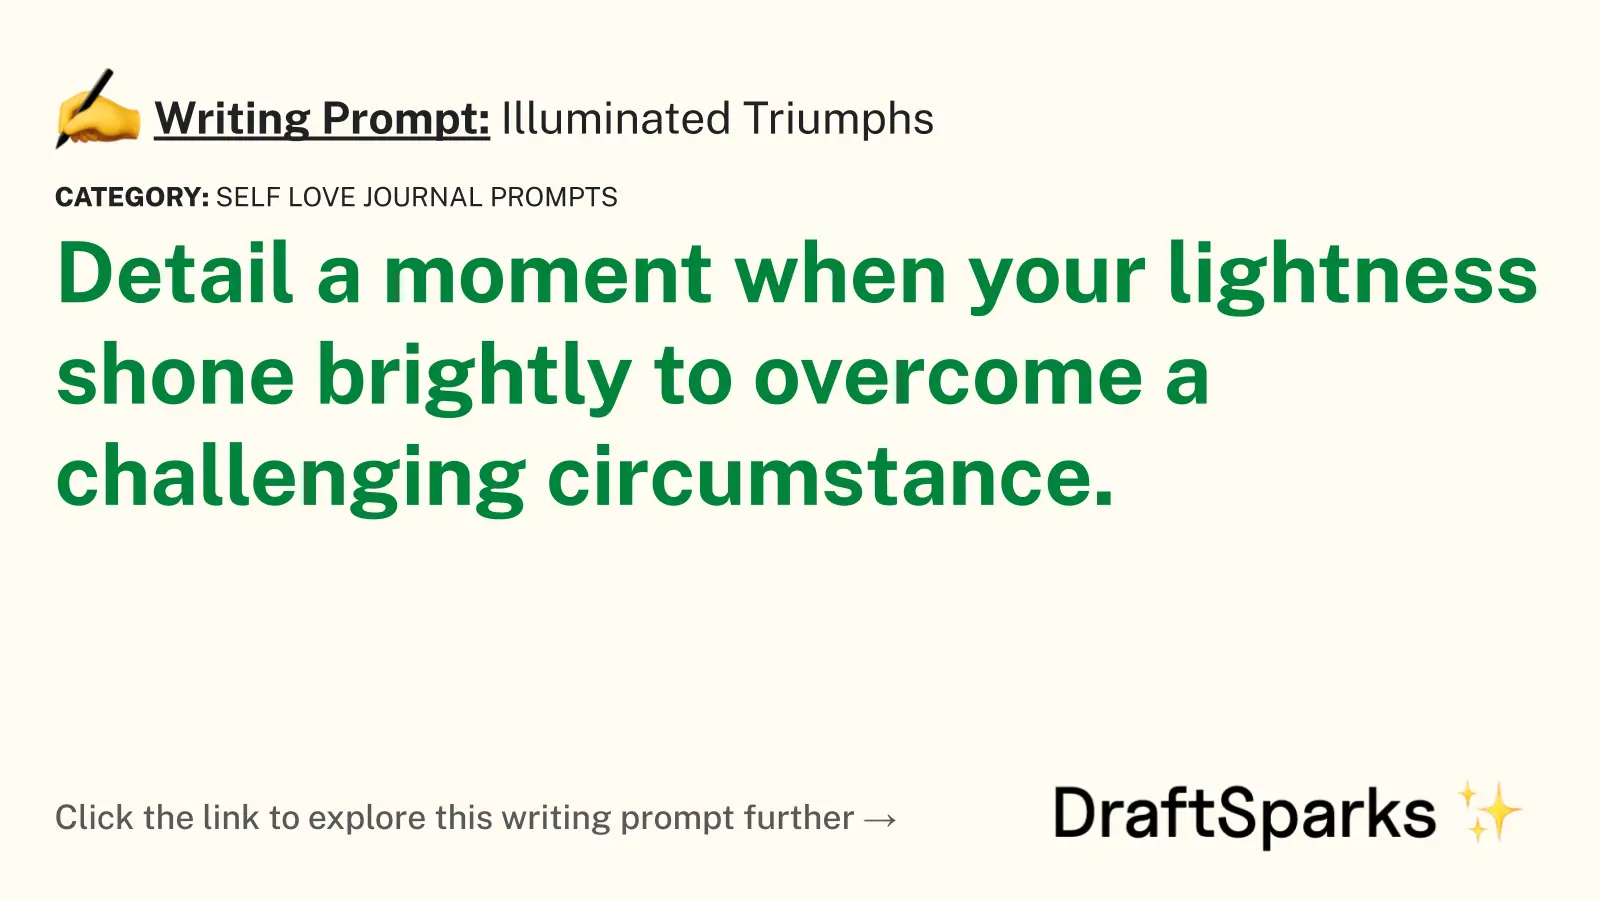 Illuminated Triumphs